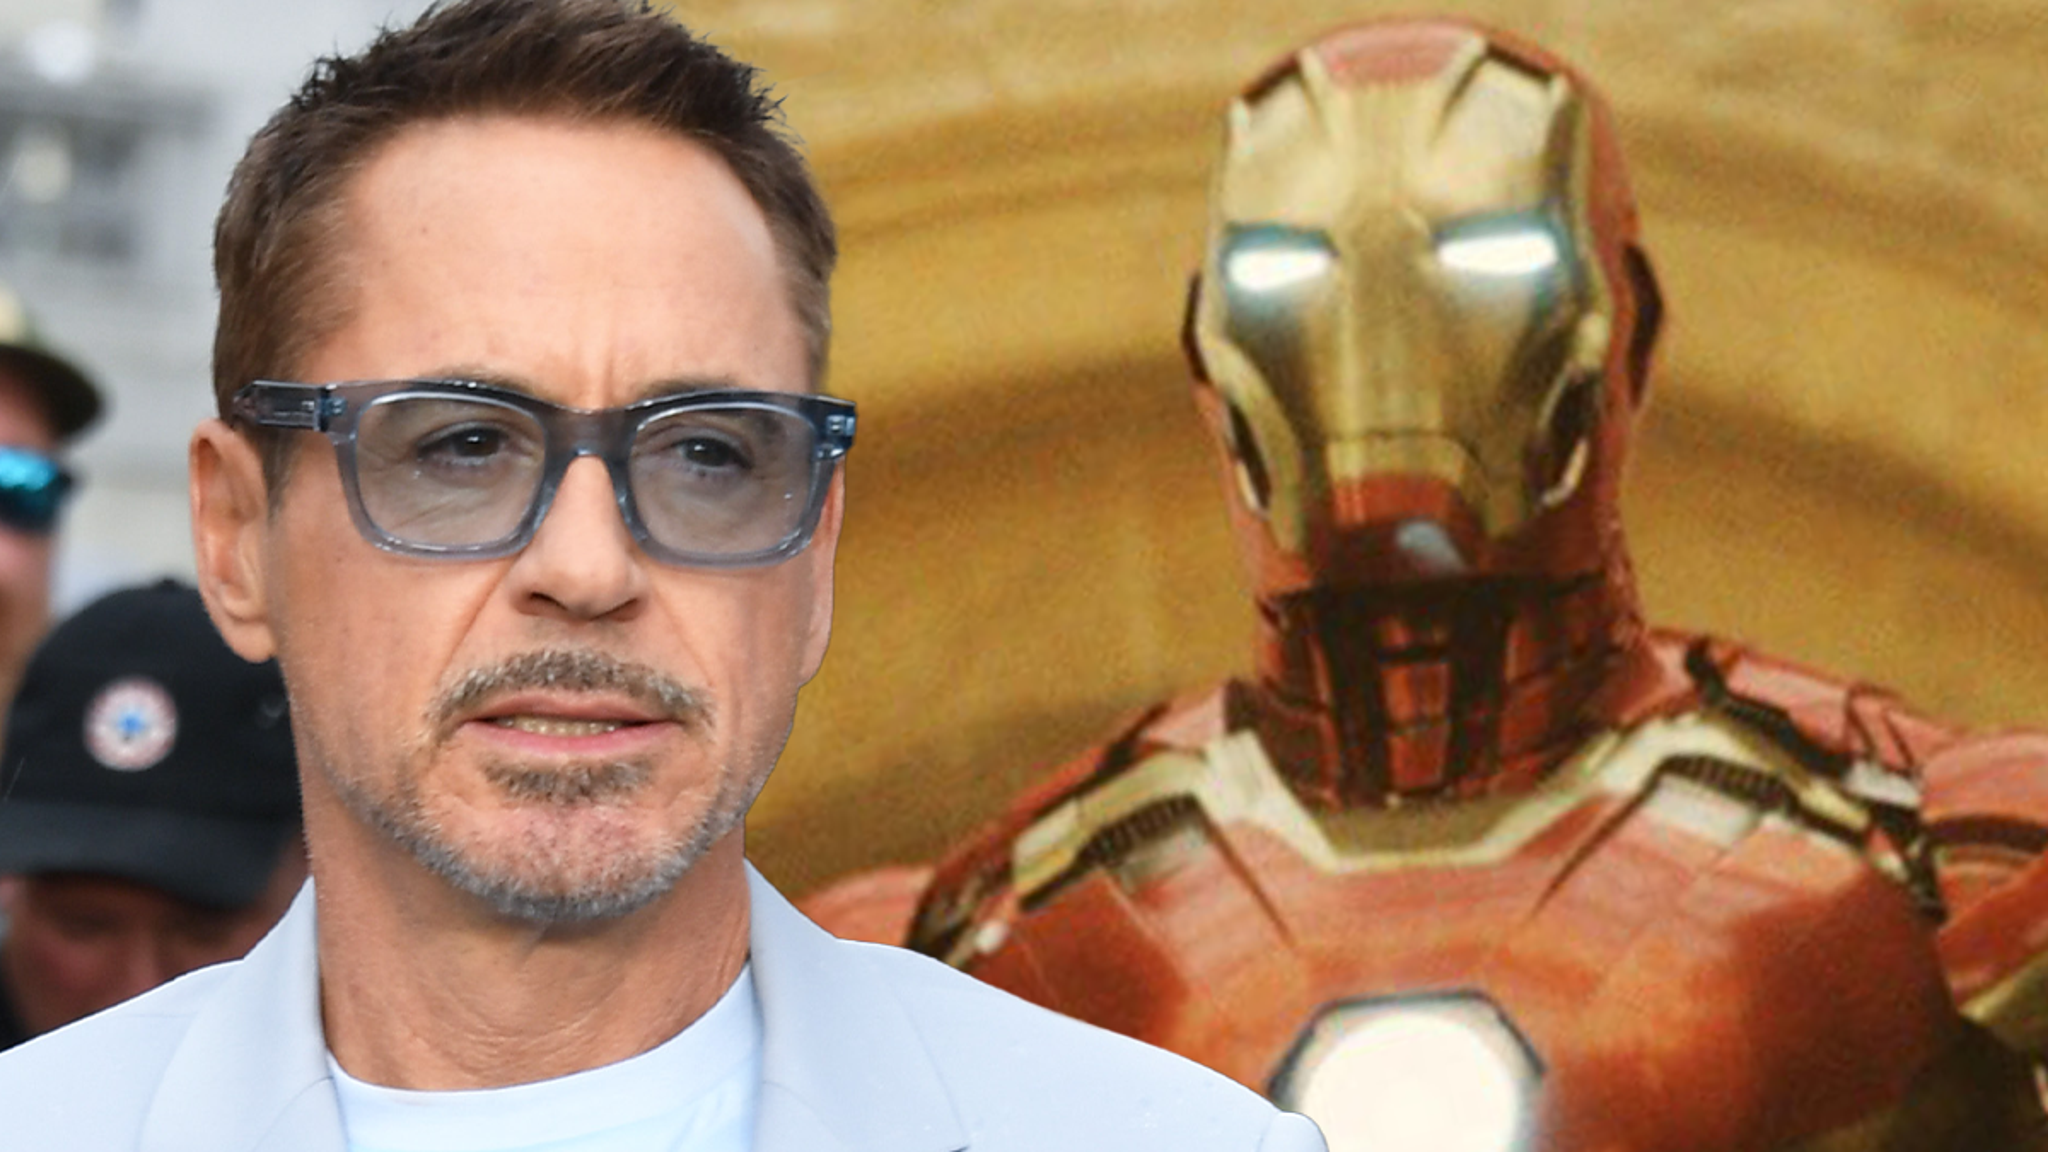 Robert Downey Jr.’s Iron Man Won’t Return to Marvel Films, Feige Says